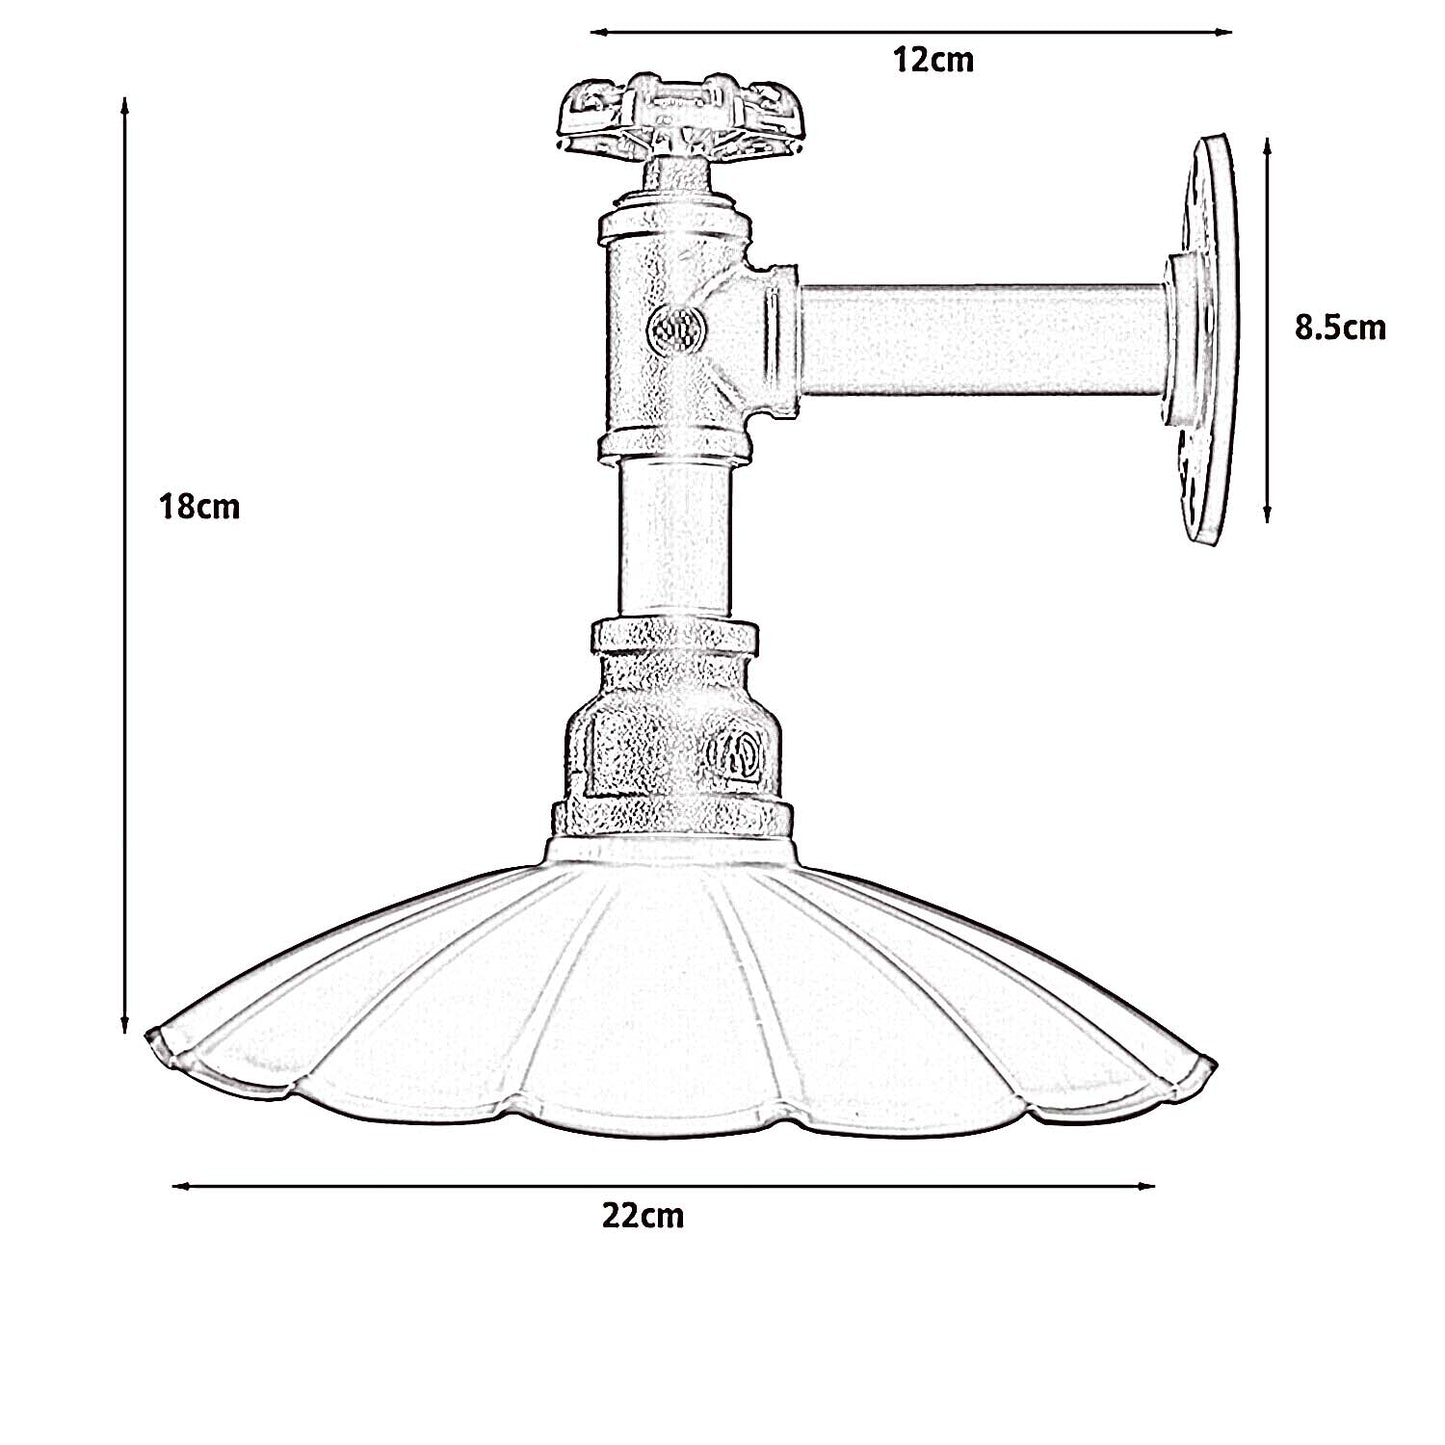 Industrie Regenschirm Form Schirm Wand Rohr Leuchten Innenleuchte Metall Lampe Silber gebürstet LEDSone DE